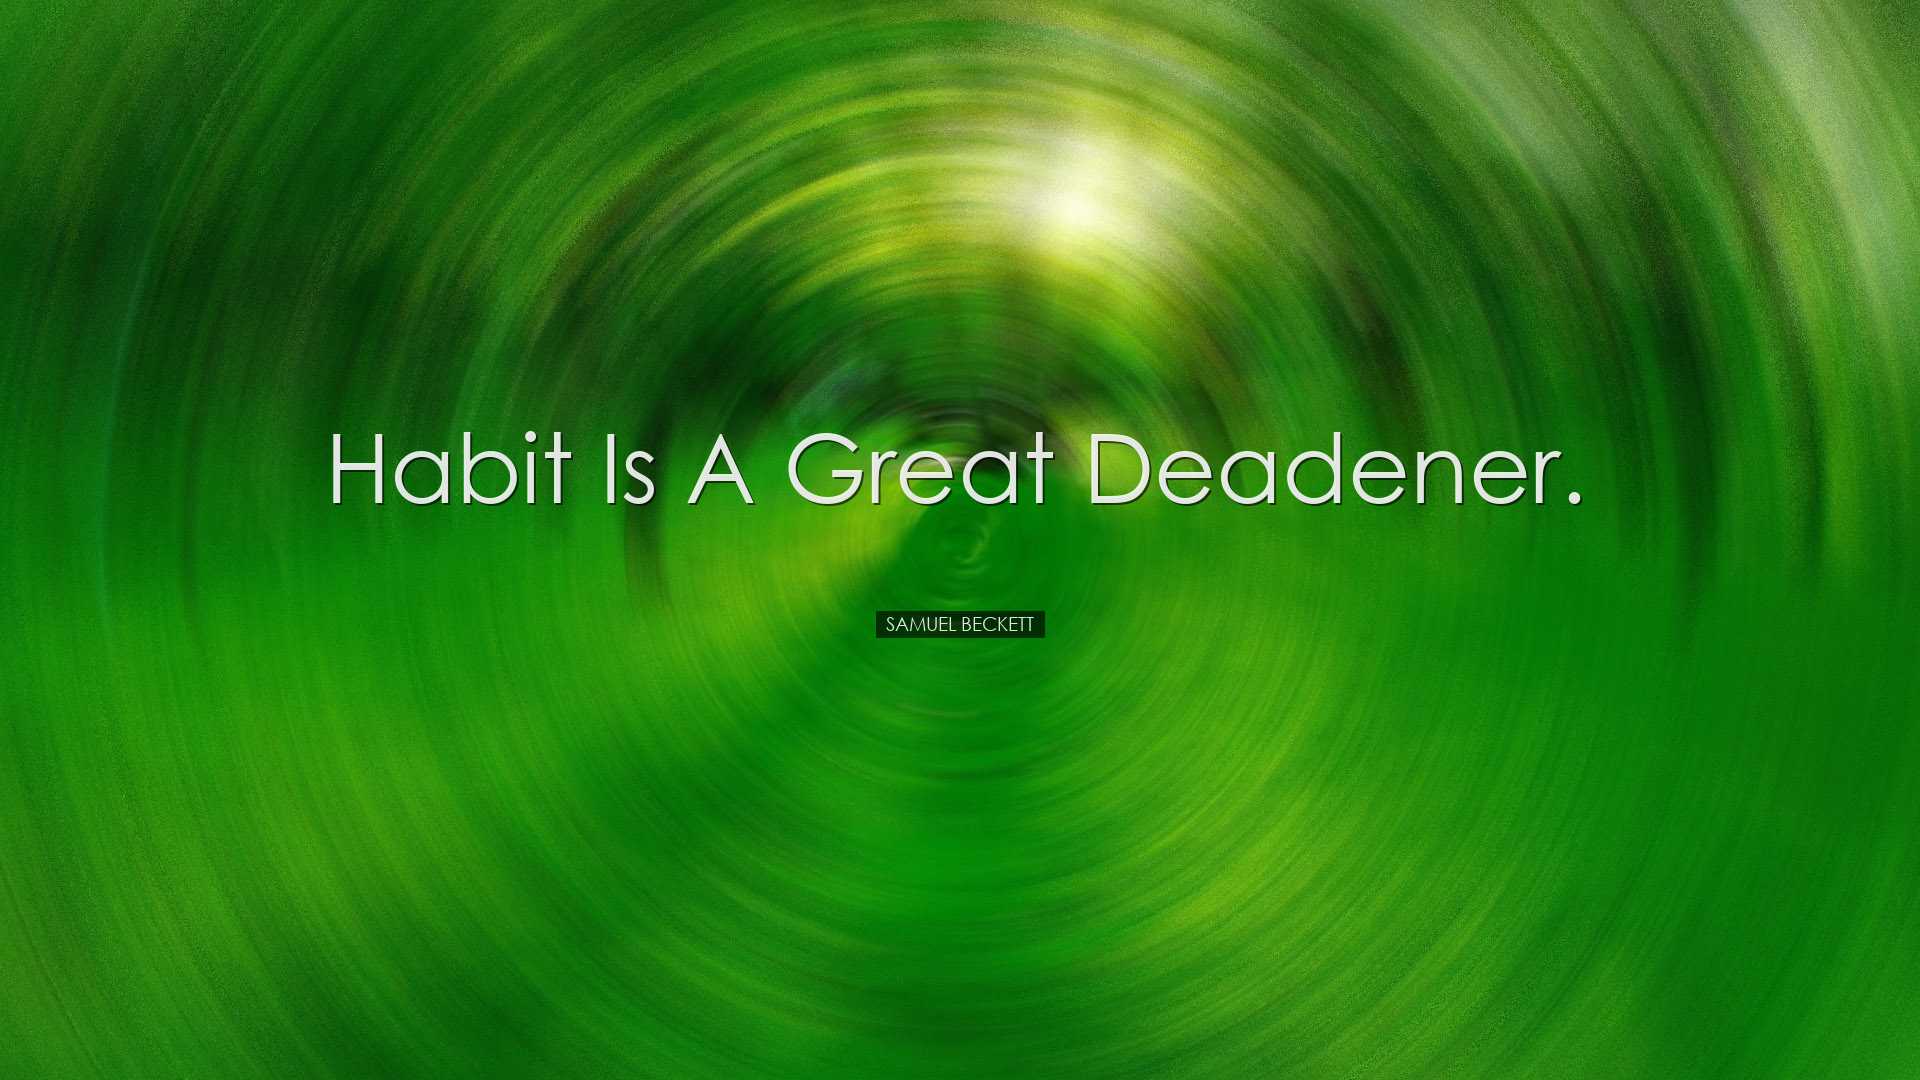 Habit is a great deadener. - Samuel Beckett